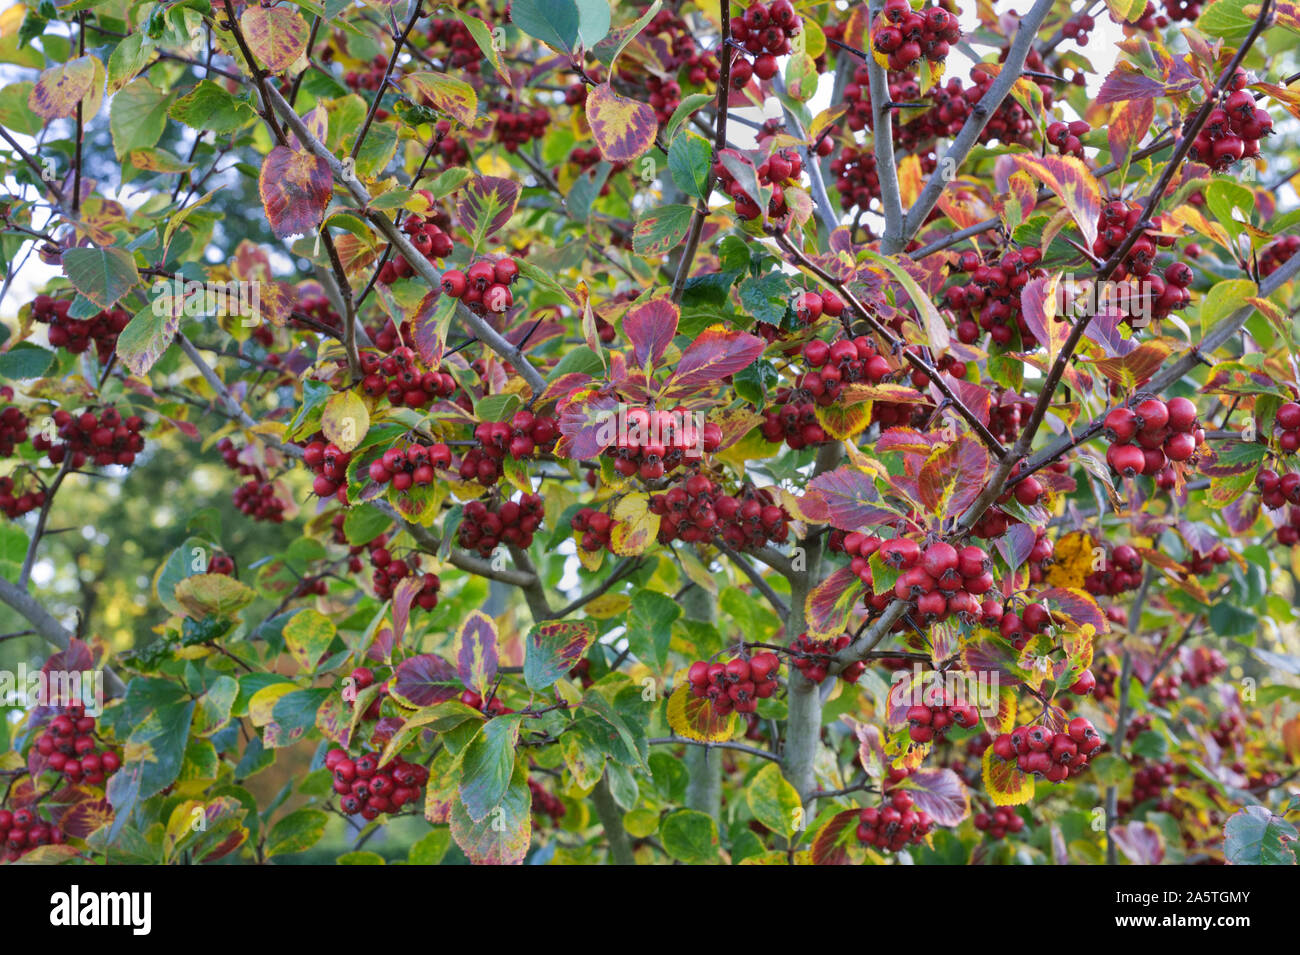 Beeren Crataegus Prunifolia persimilis "SPLENDENS" im Herbst. Endivie Prunifolia cockspur Dorn'' Stockfoto